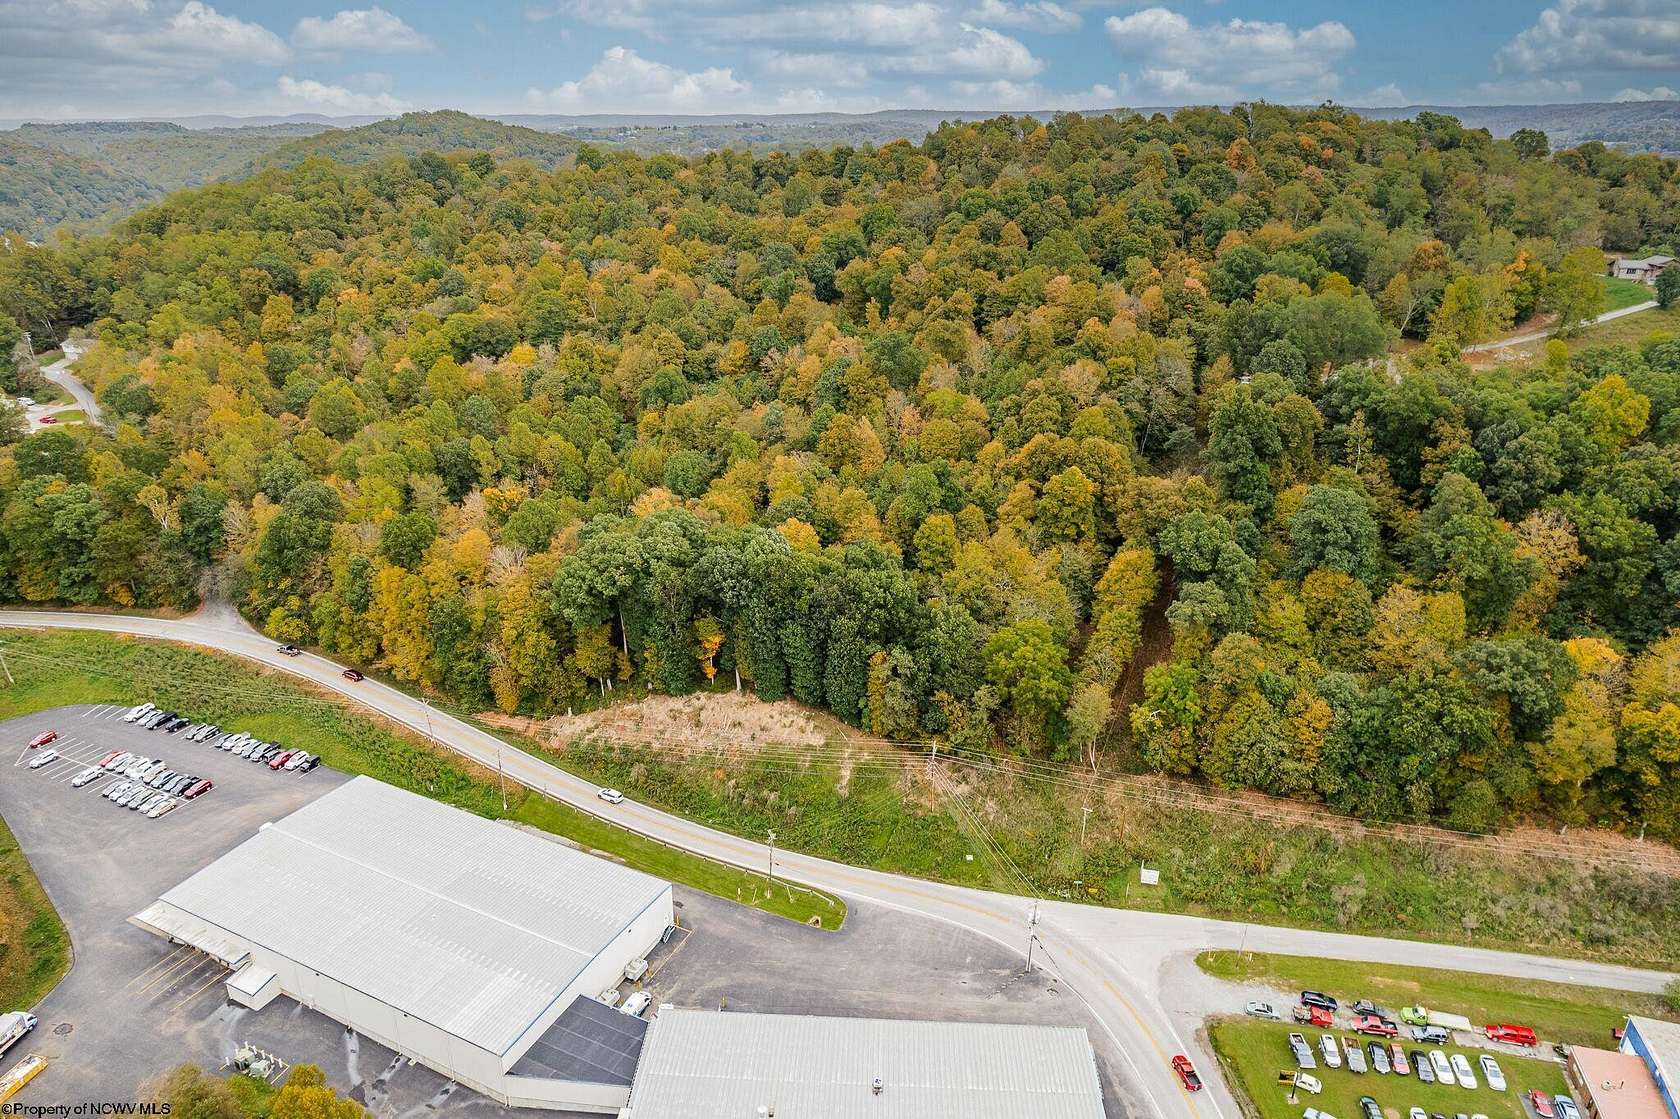 24 Acres of Land for Sale in Morgantown, West Virginia